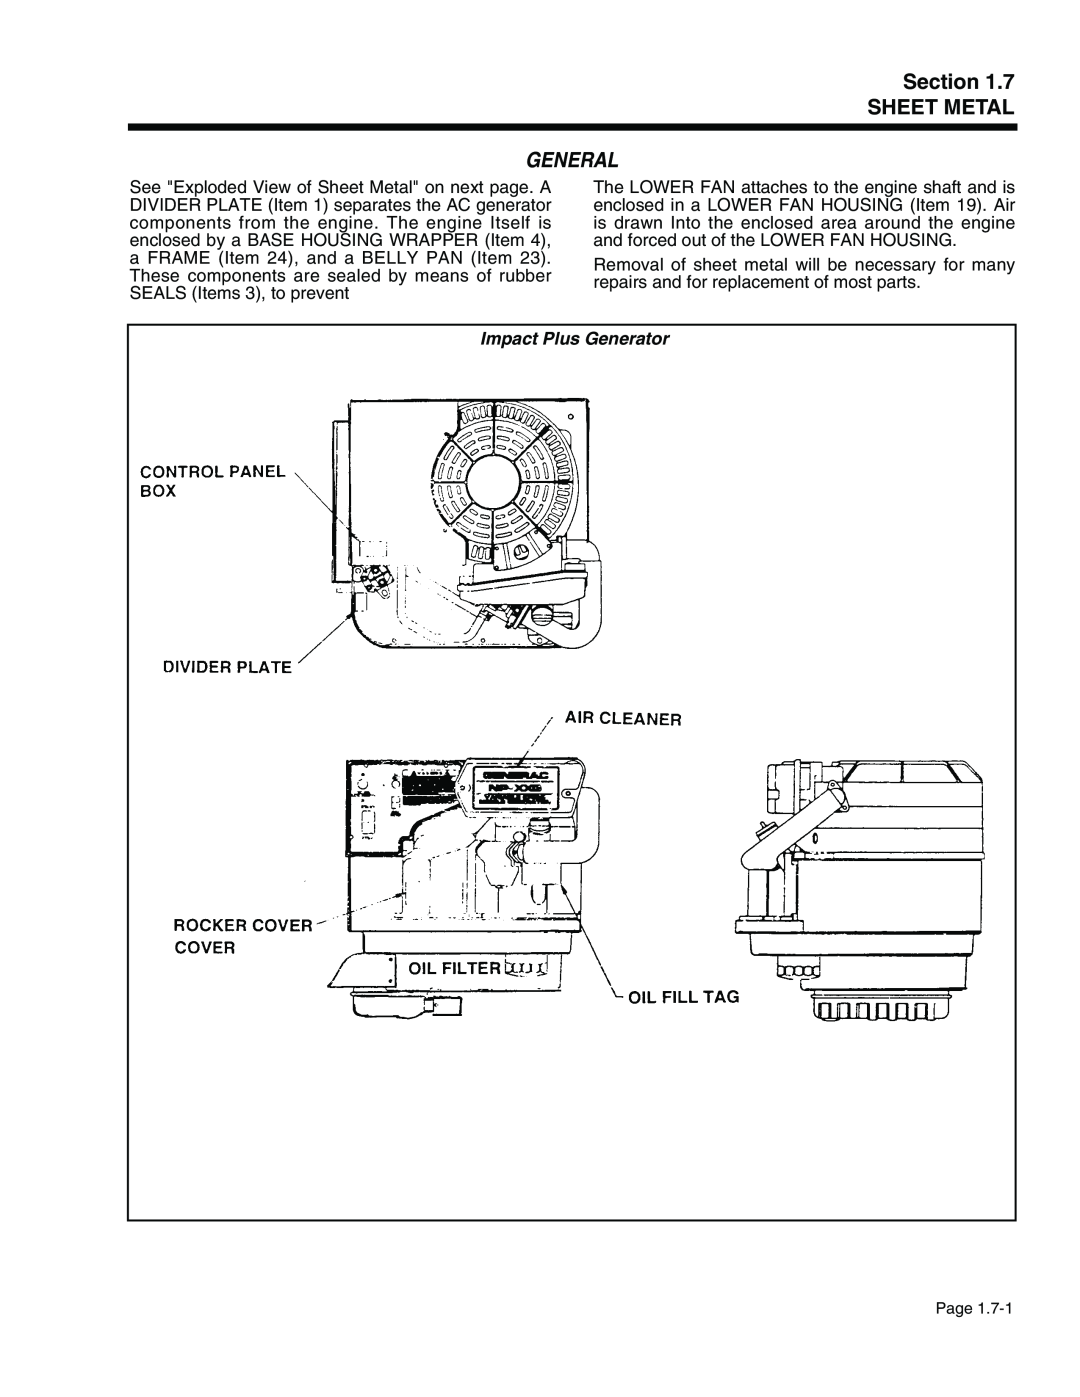 Generac Power Systems 941-2, 940-2 service manual Section SHEET METAL, Impact Plus Generator, General 